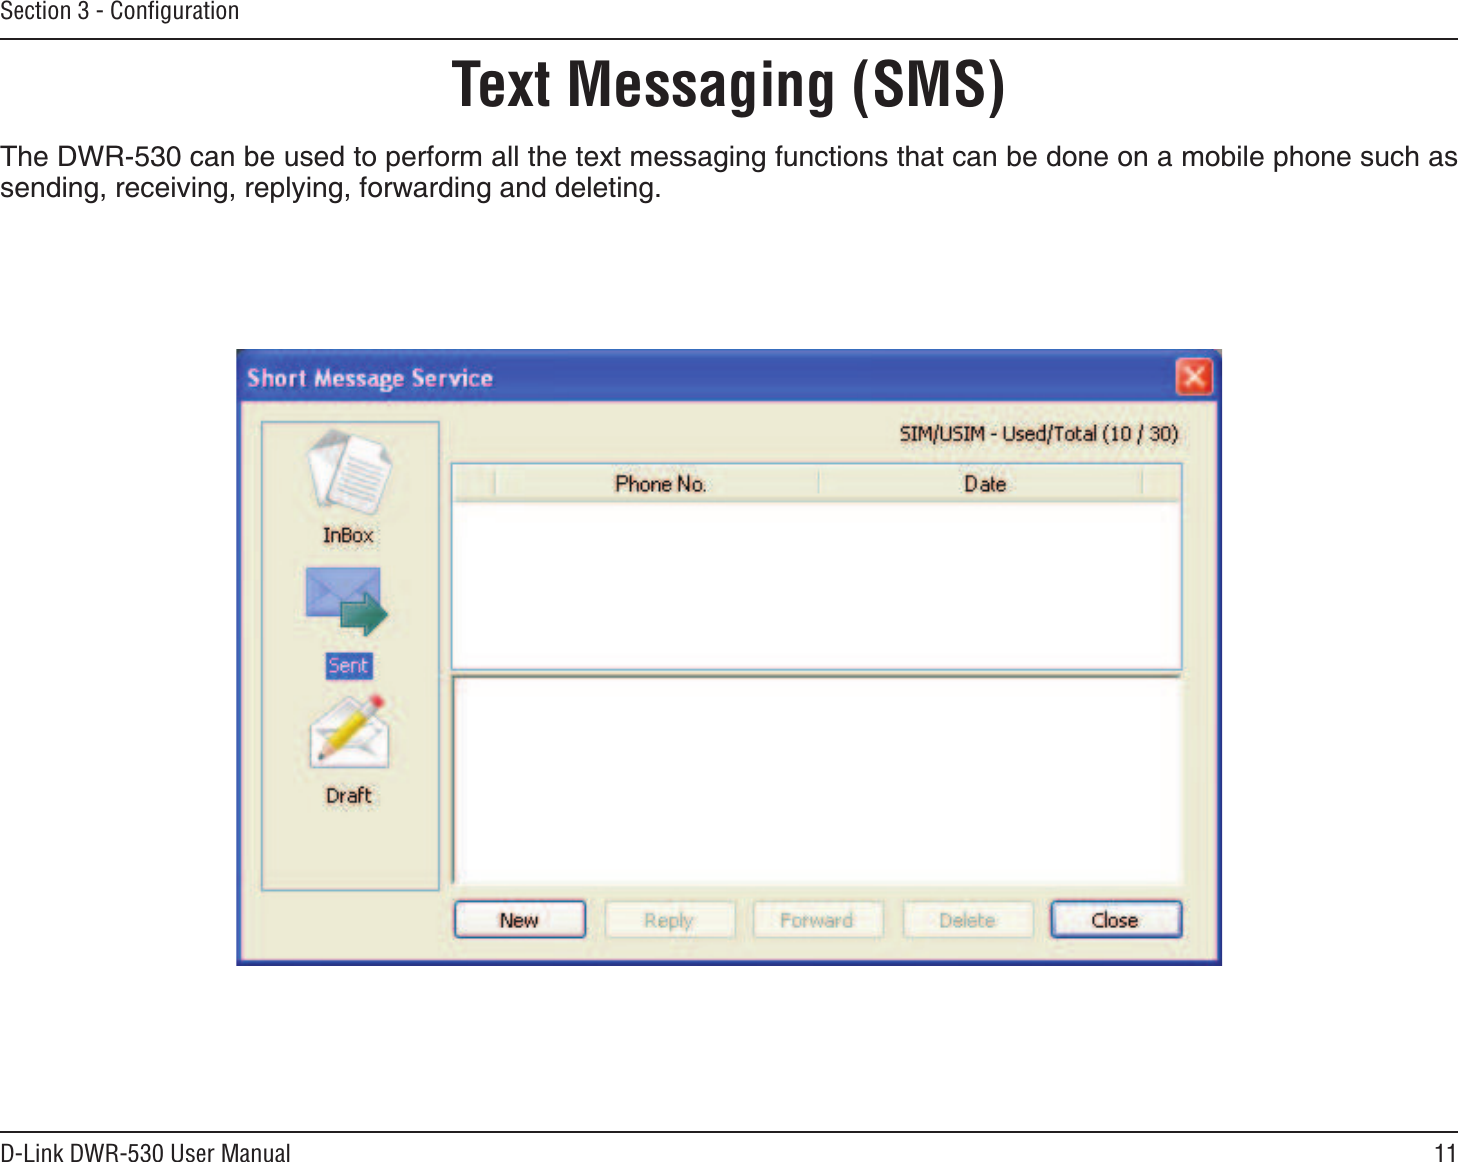 11D-Link DWR-530 User ManualSection 3 - ConﬁgurationText Messaging (SMS)6JG&amp;94ECPDGWUGFVQRGTHQTOCNNVJGVGZVOGUUCIKPIHWPEVKQPUVJCVECPDGFQPGQPCOQDKNGRJQPGUWEJCUUGPFKPITGEGKXKPITGRN[KPIHQTYCTFKPICPFFGNGVKPI